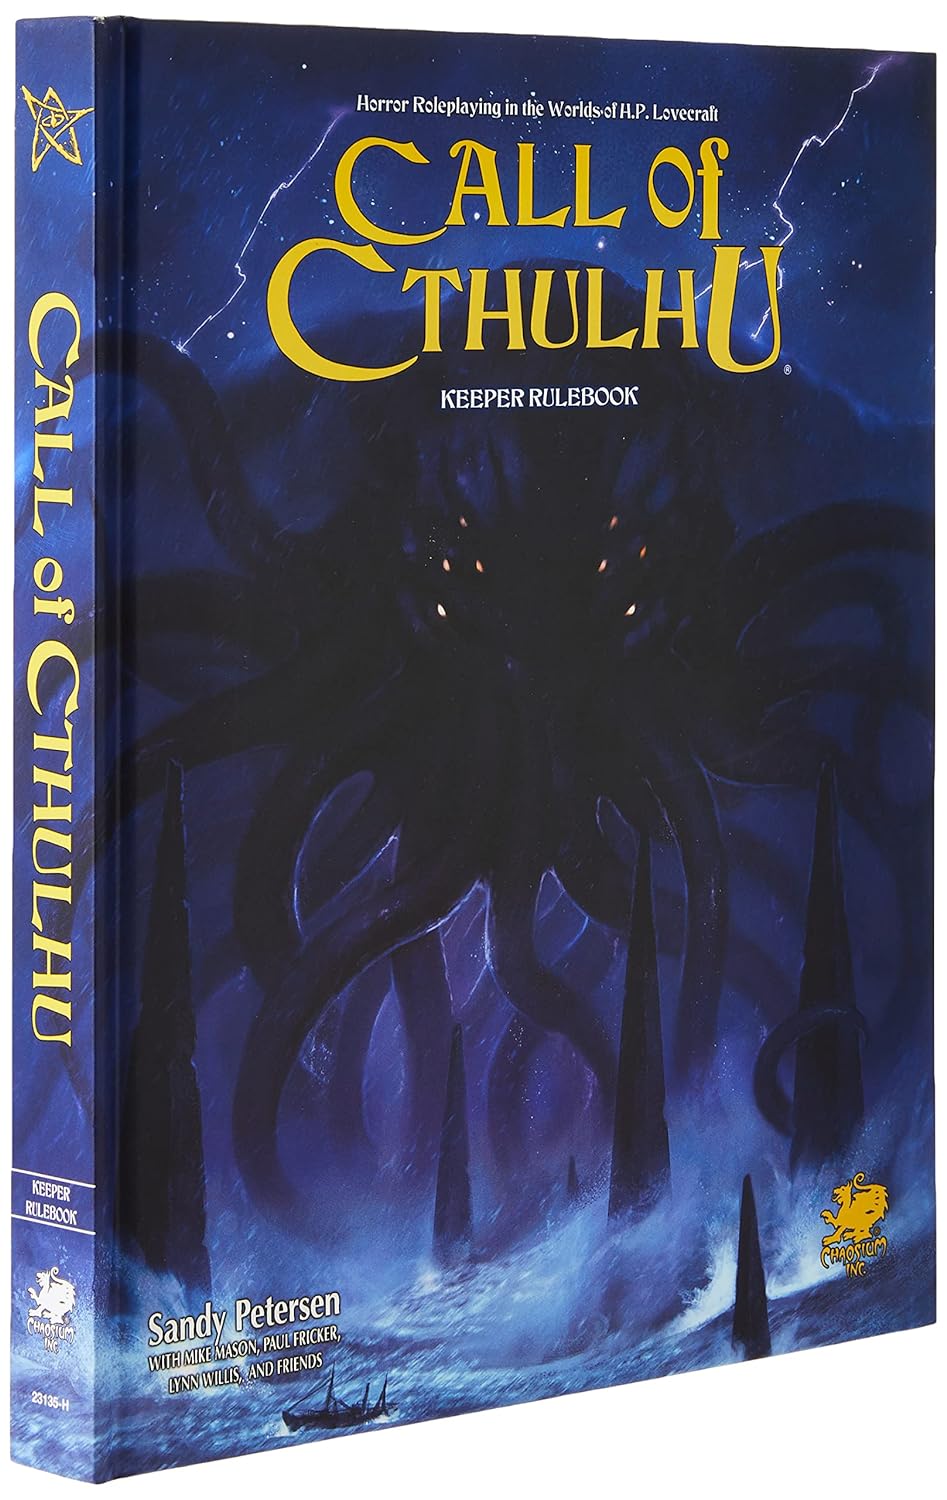 Call of Cthulhu 7th Edition: Keeper Rulebook - Mini Megastore